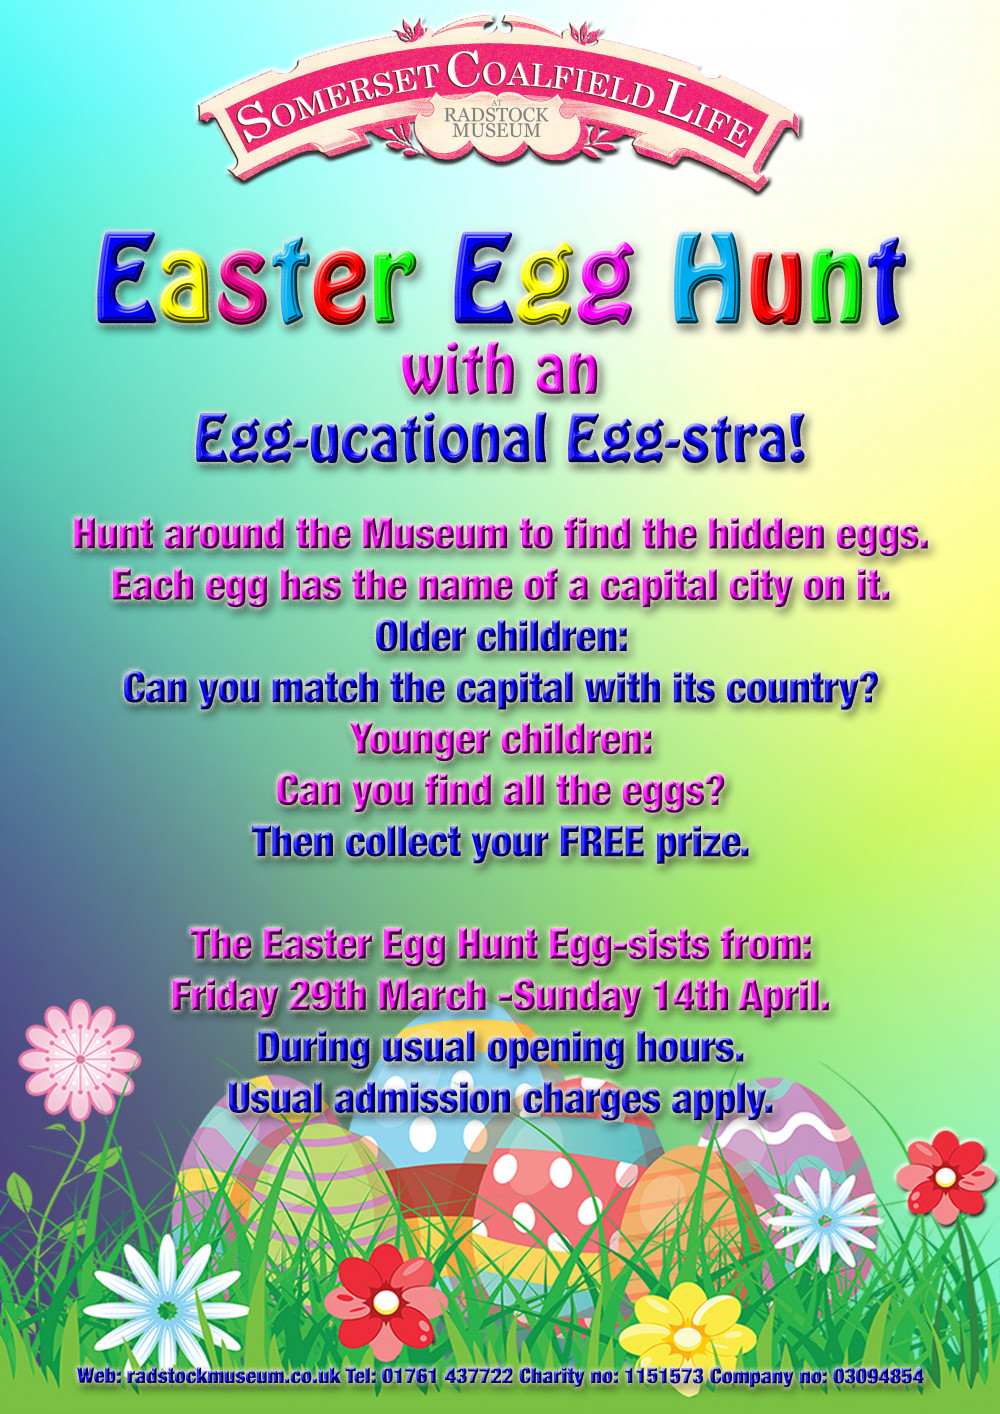 Easter Egg. Hunt at Radstock Museum